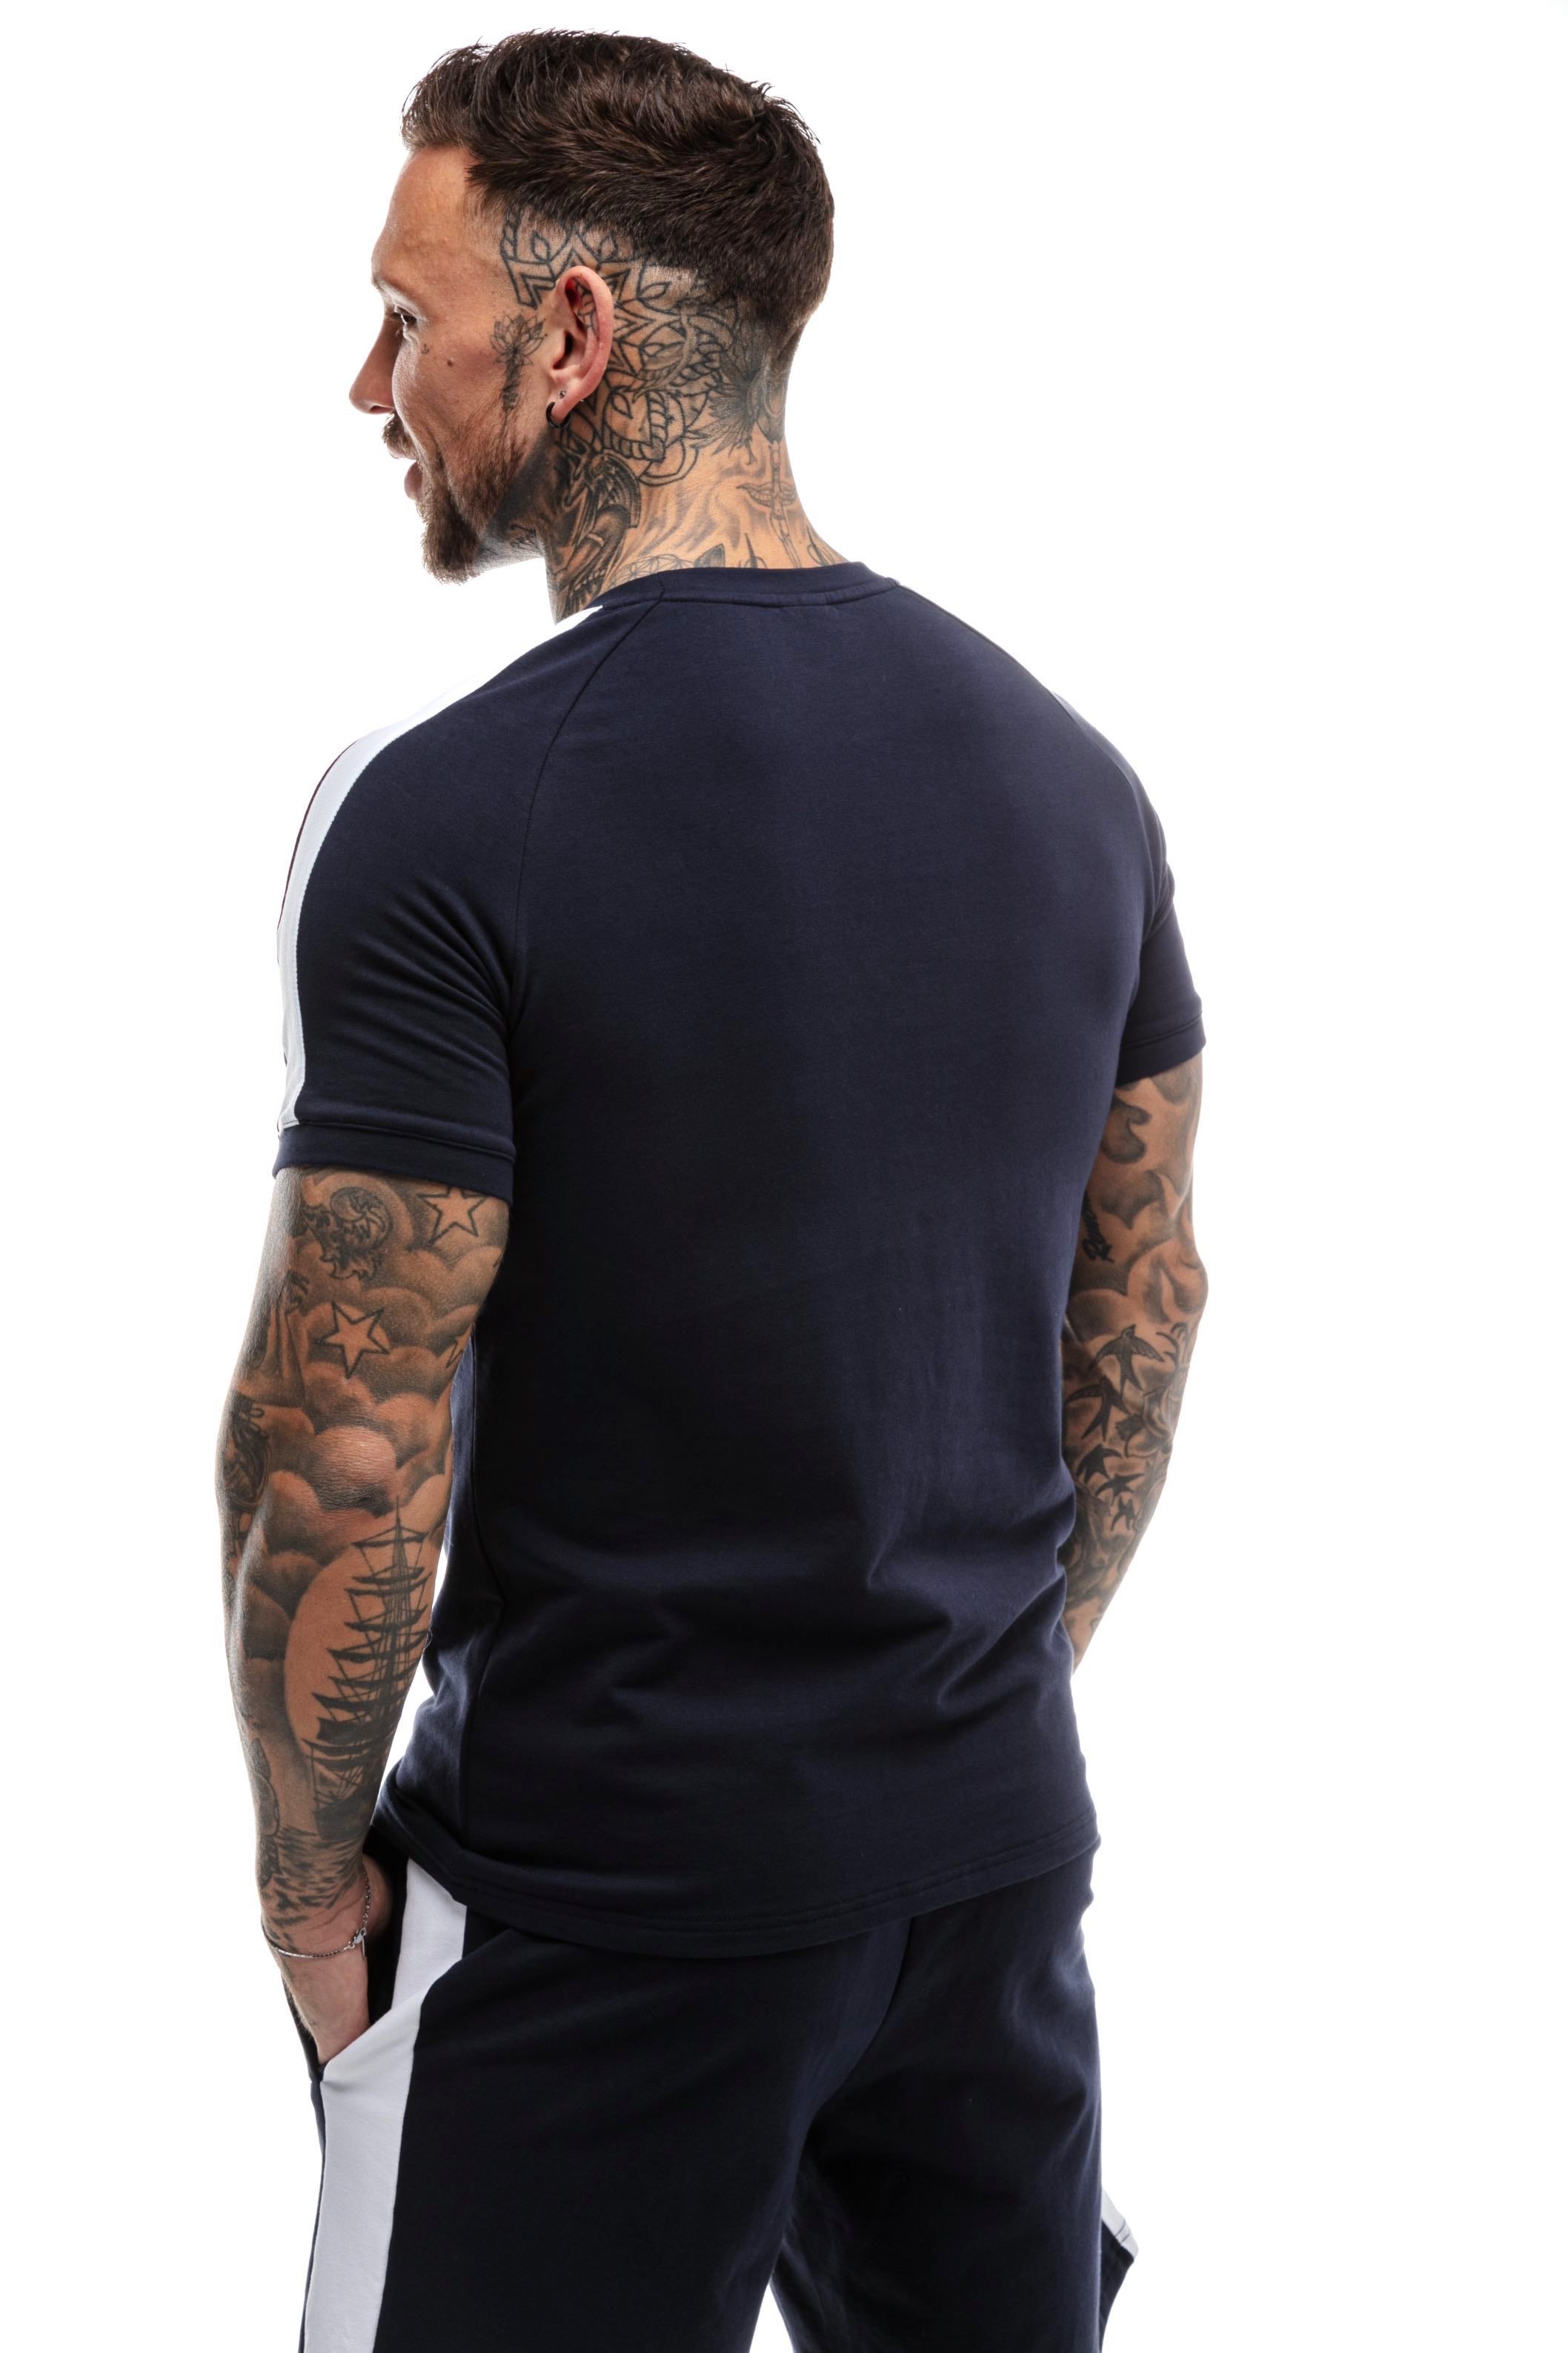 GymFreak Icon Range T-Shirt - Navy Blue